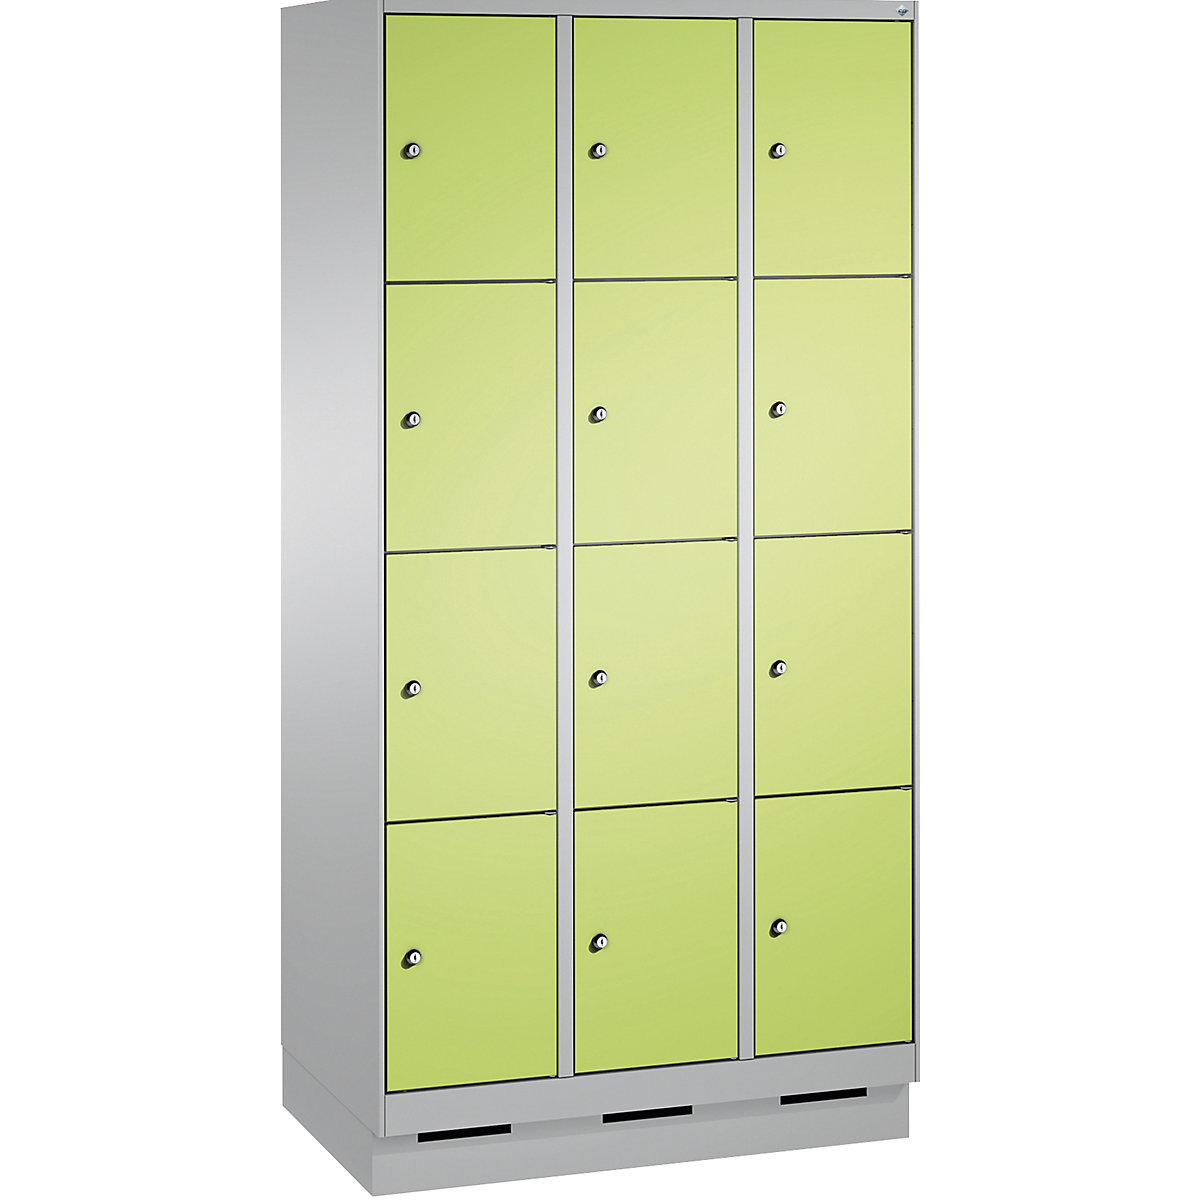 EVOLO locker unit, with plinth – C+P, 3 compartments, 4 shelf compartments each, compartment width 300 mm, white aluminium / viridian green-10